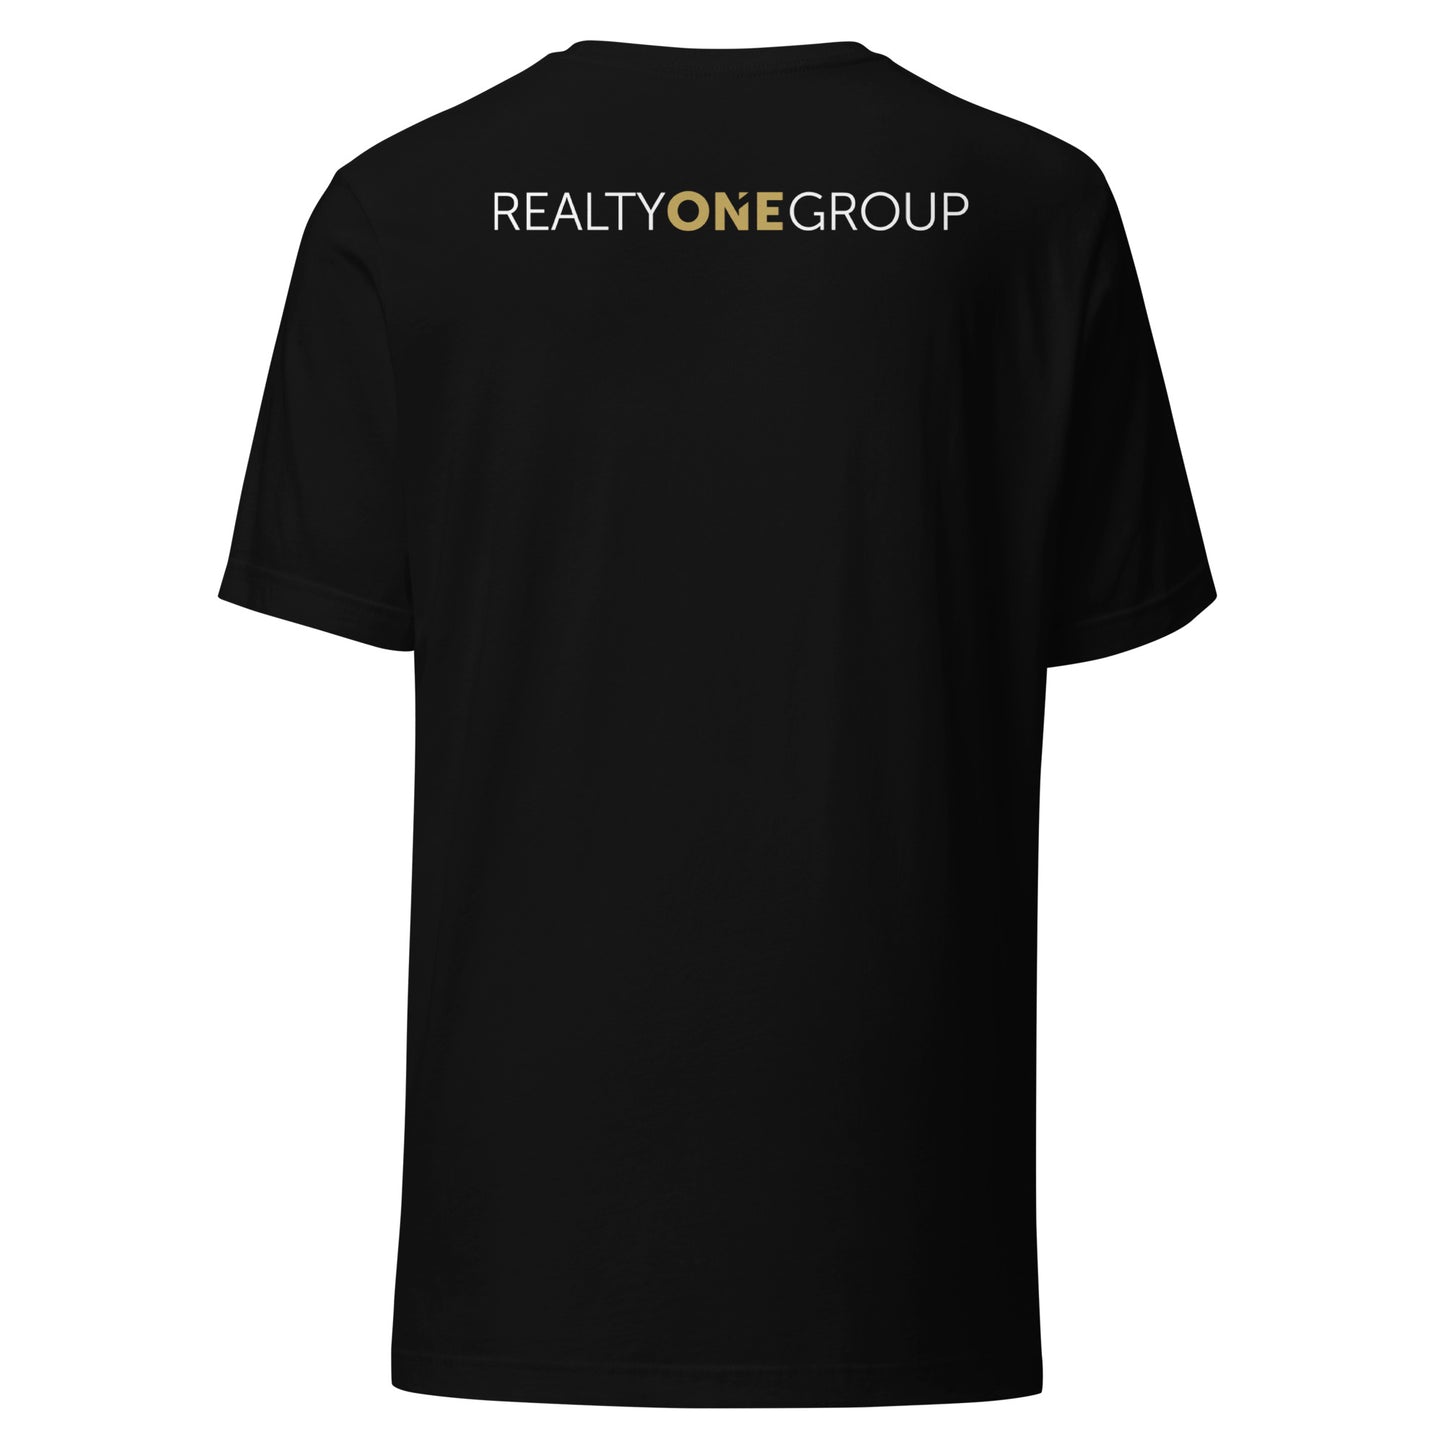 ONE Unisex Community T-Shirt (Cursive)